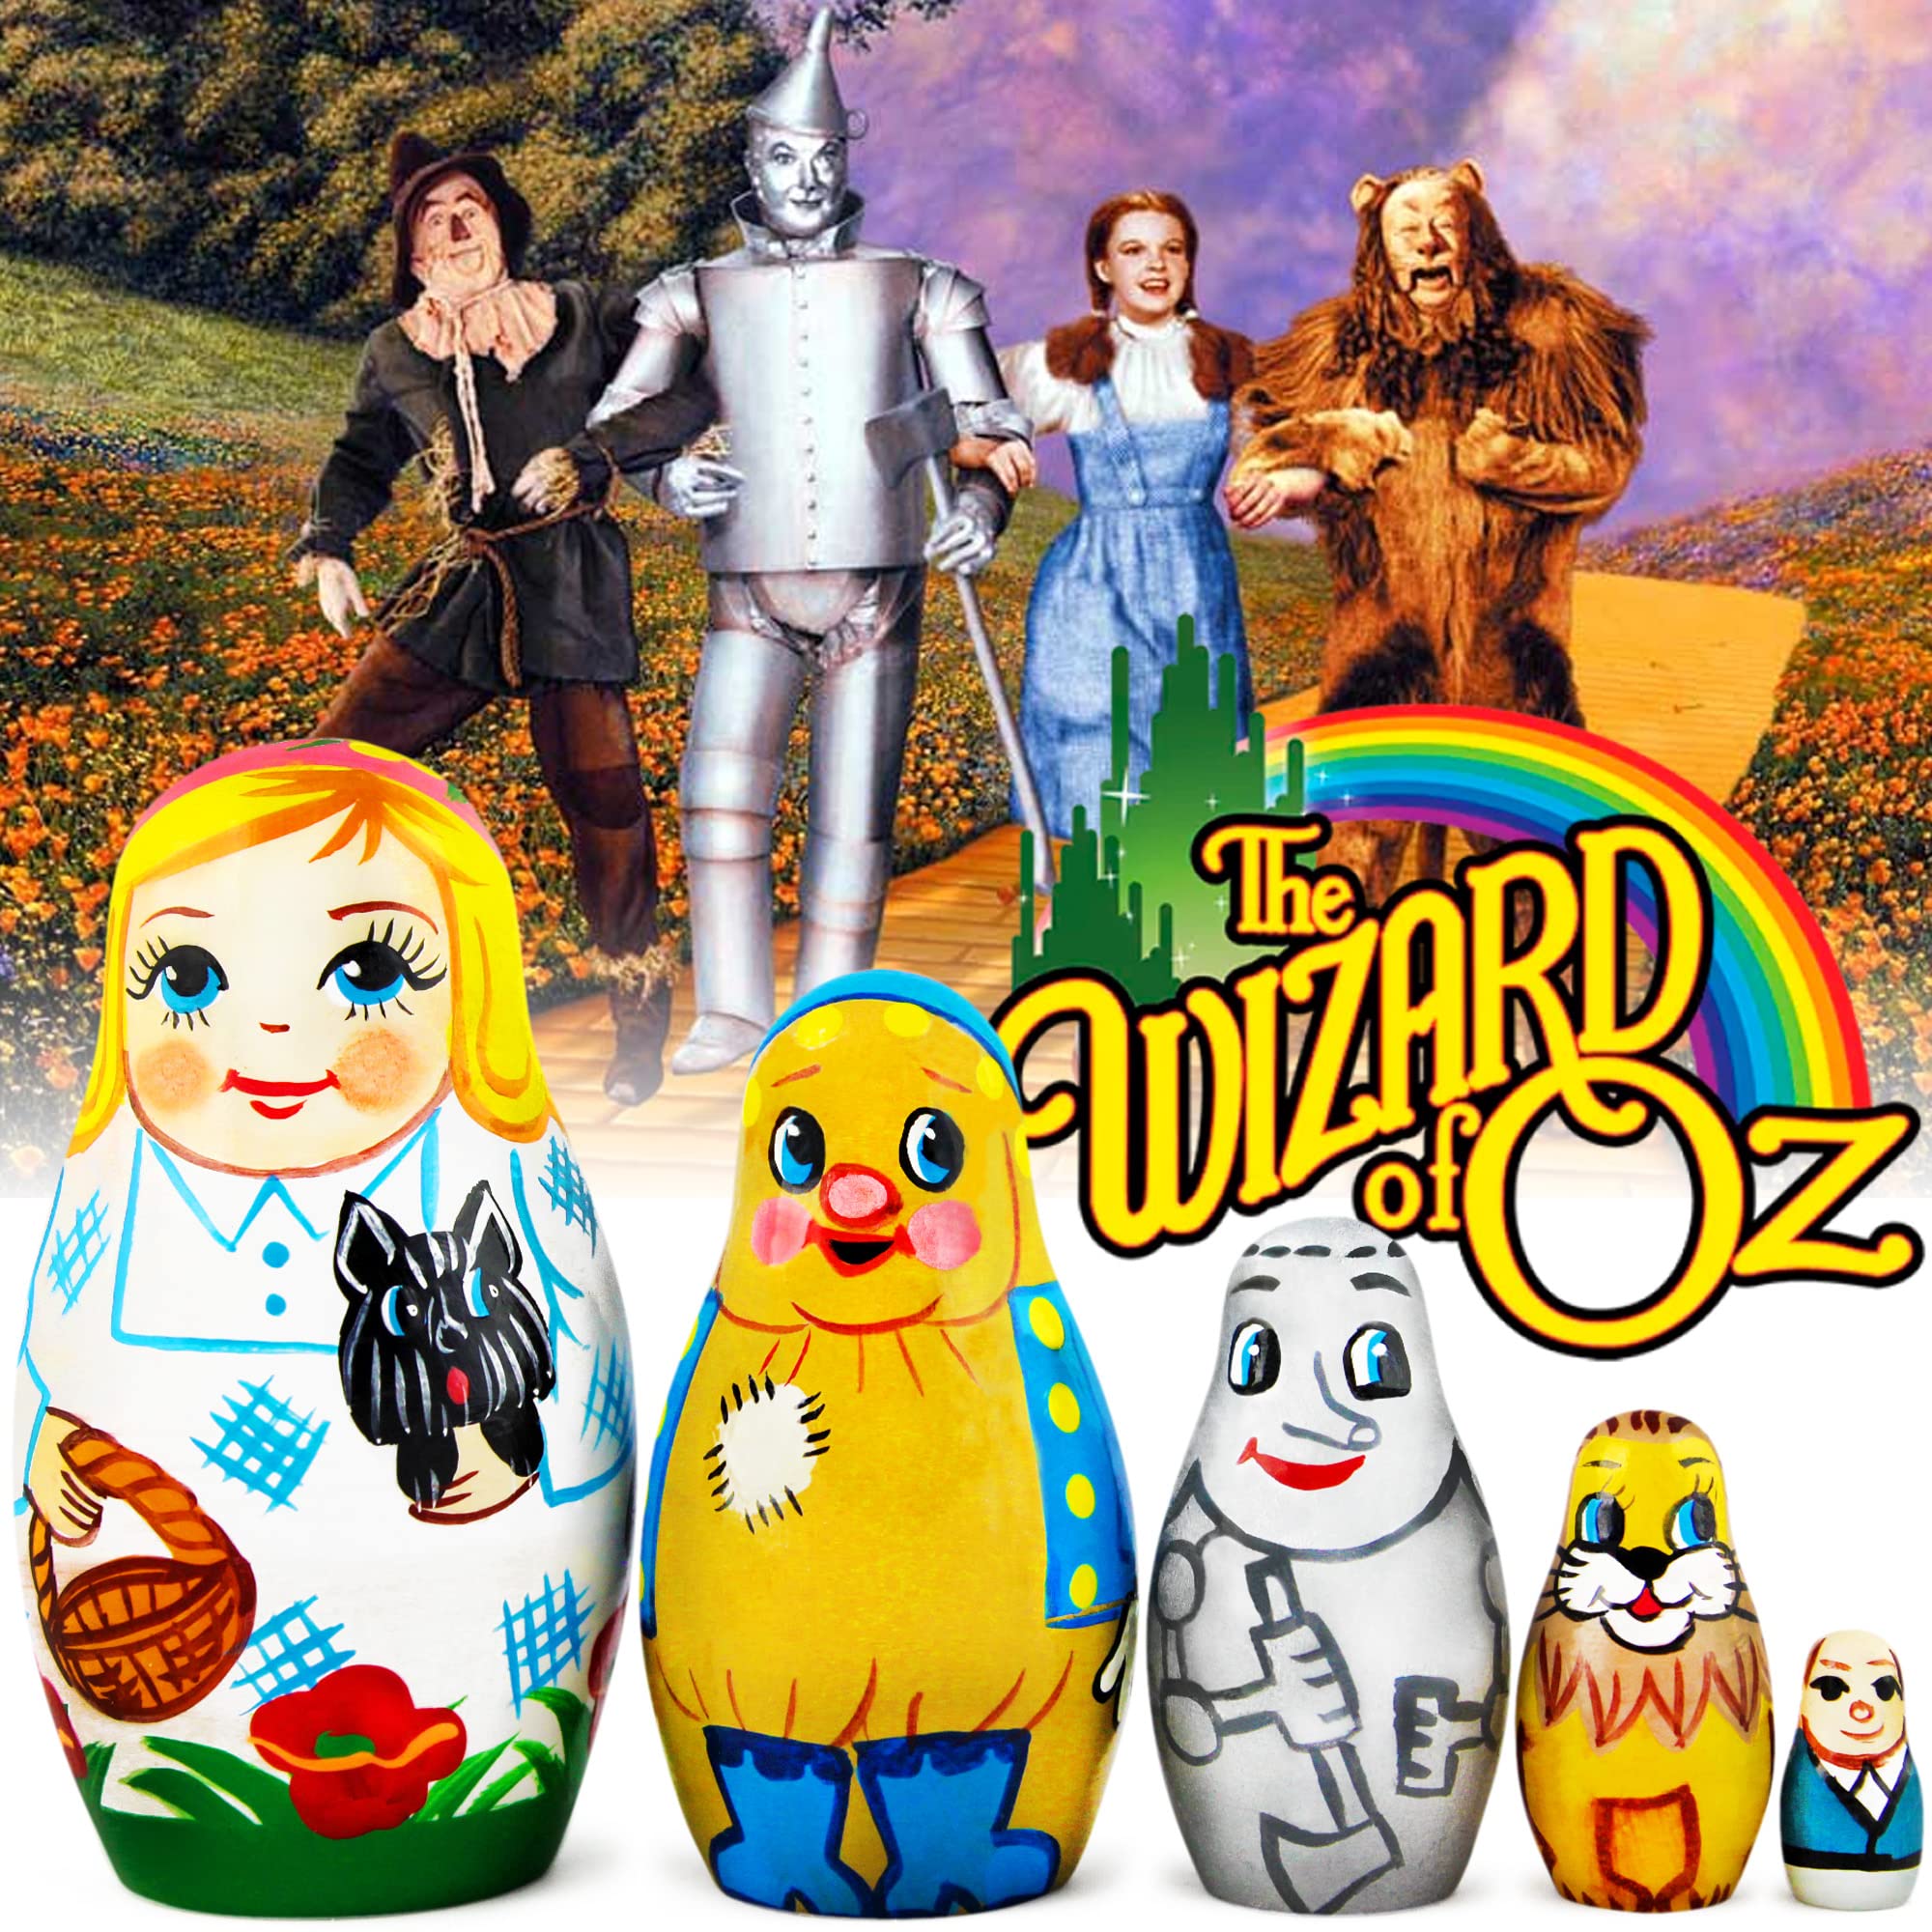 AEVVV Wizard of Oz Nesting Dolls Set of 5 pcs - Matryoshka with Wizard of Oz Decorations - Wizard of Oz Figurines - Wizard of Oz Gifts - Wizard of Oz Decor